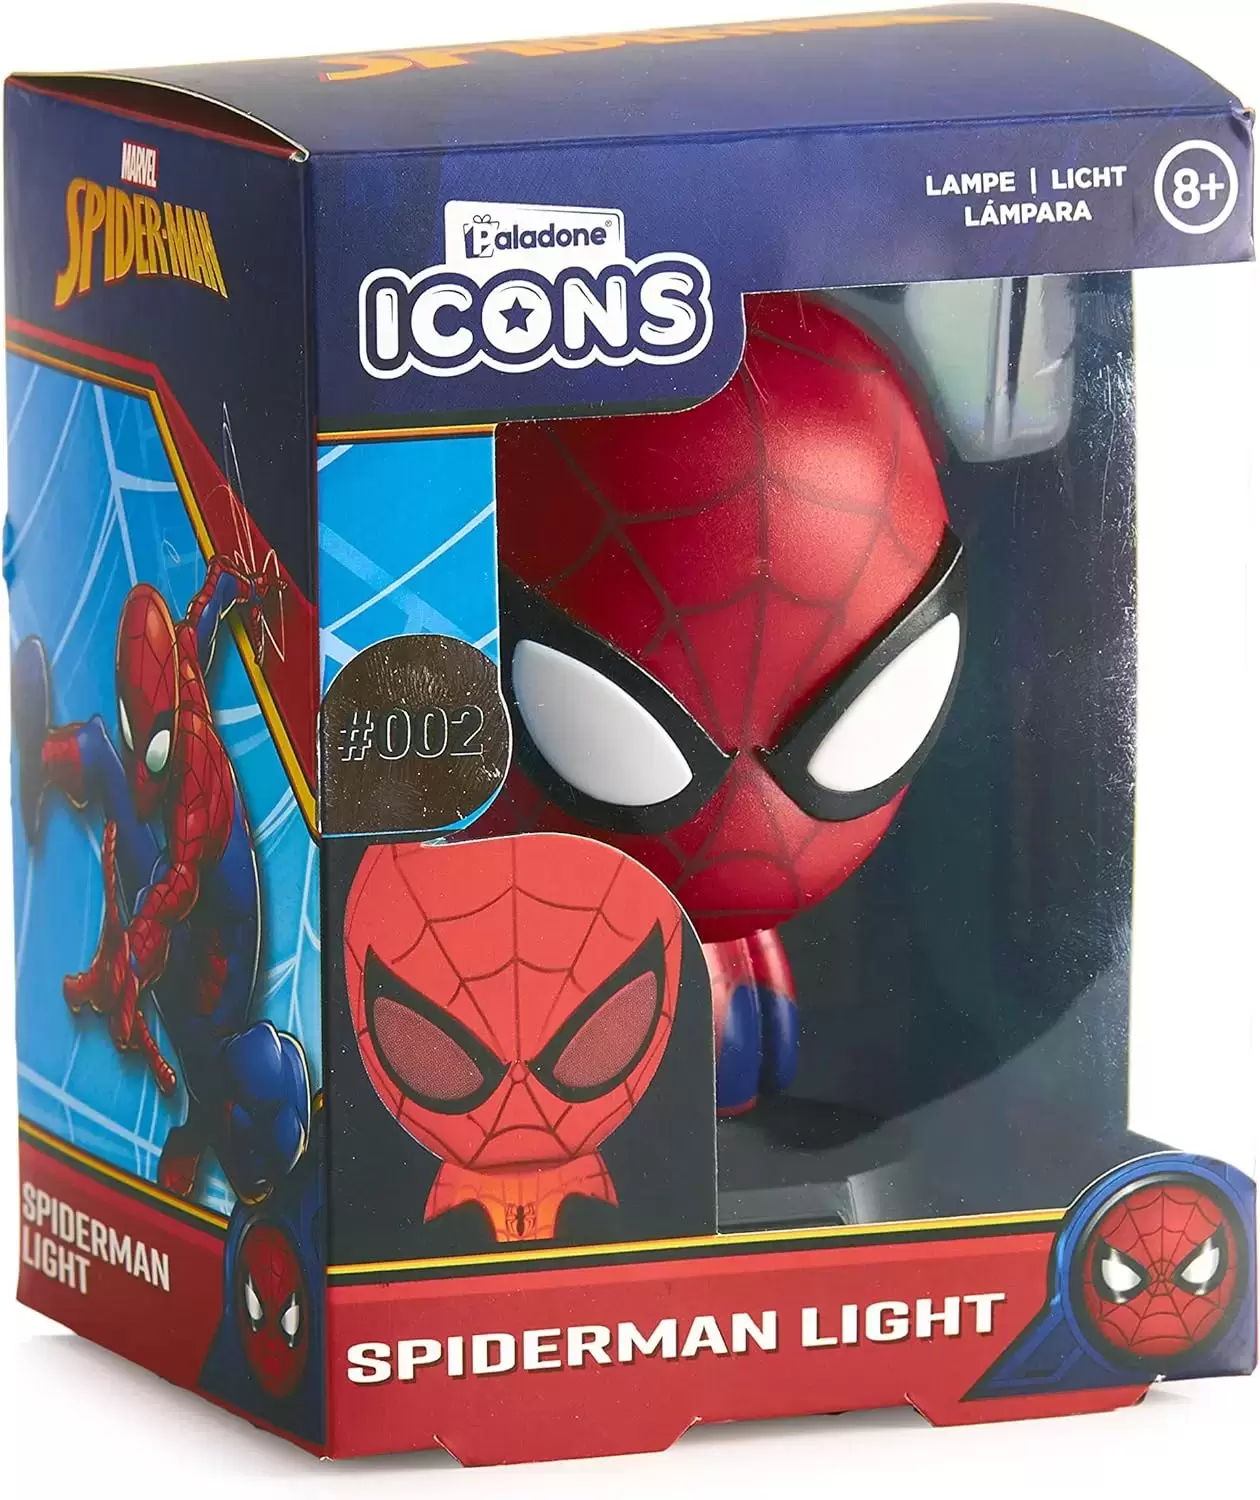 Paladone - Icons - Spiderman Light #002